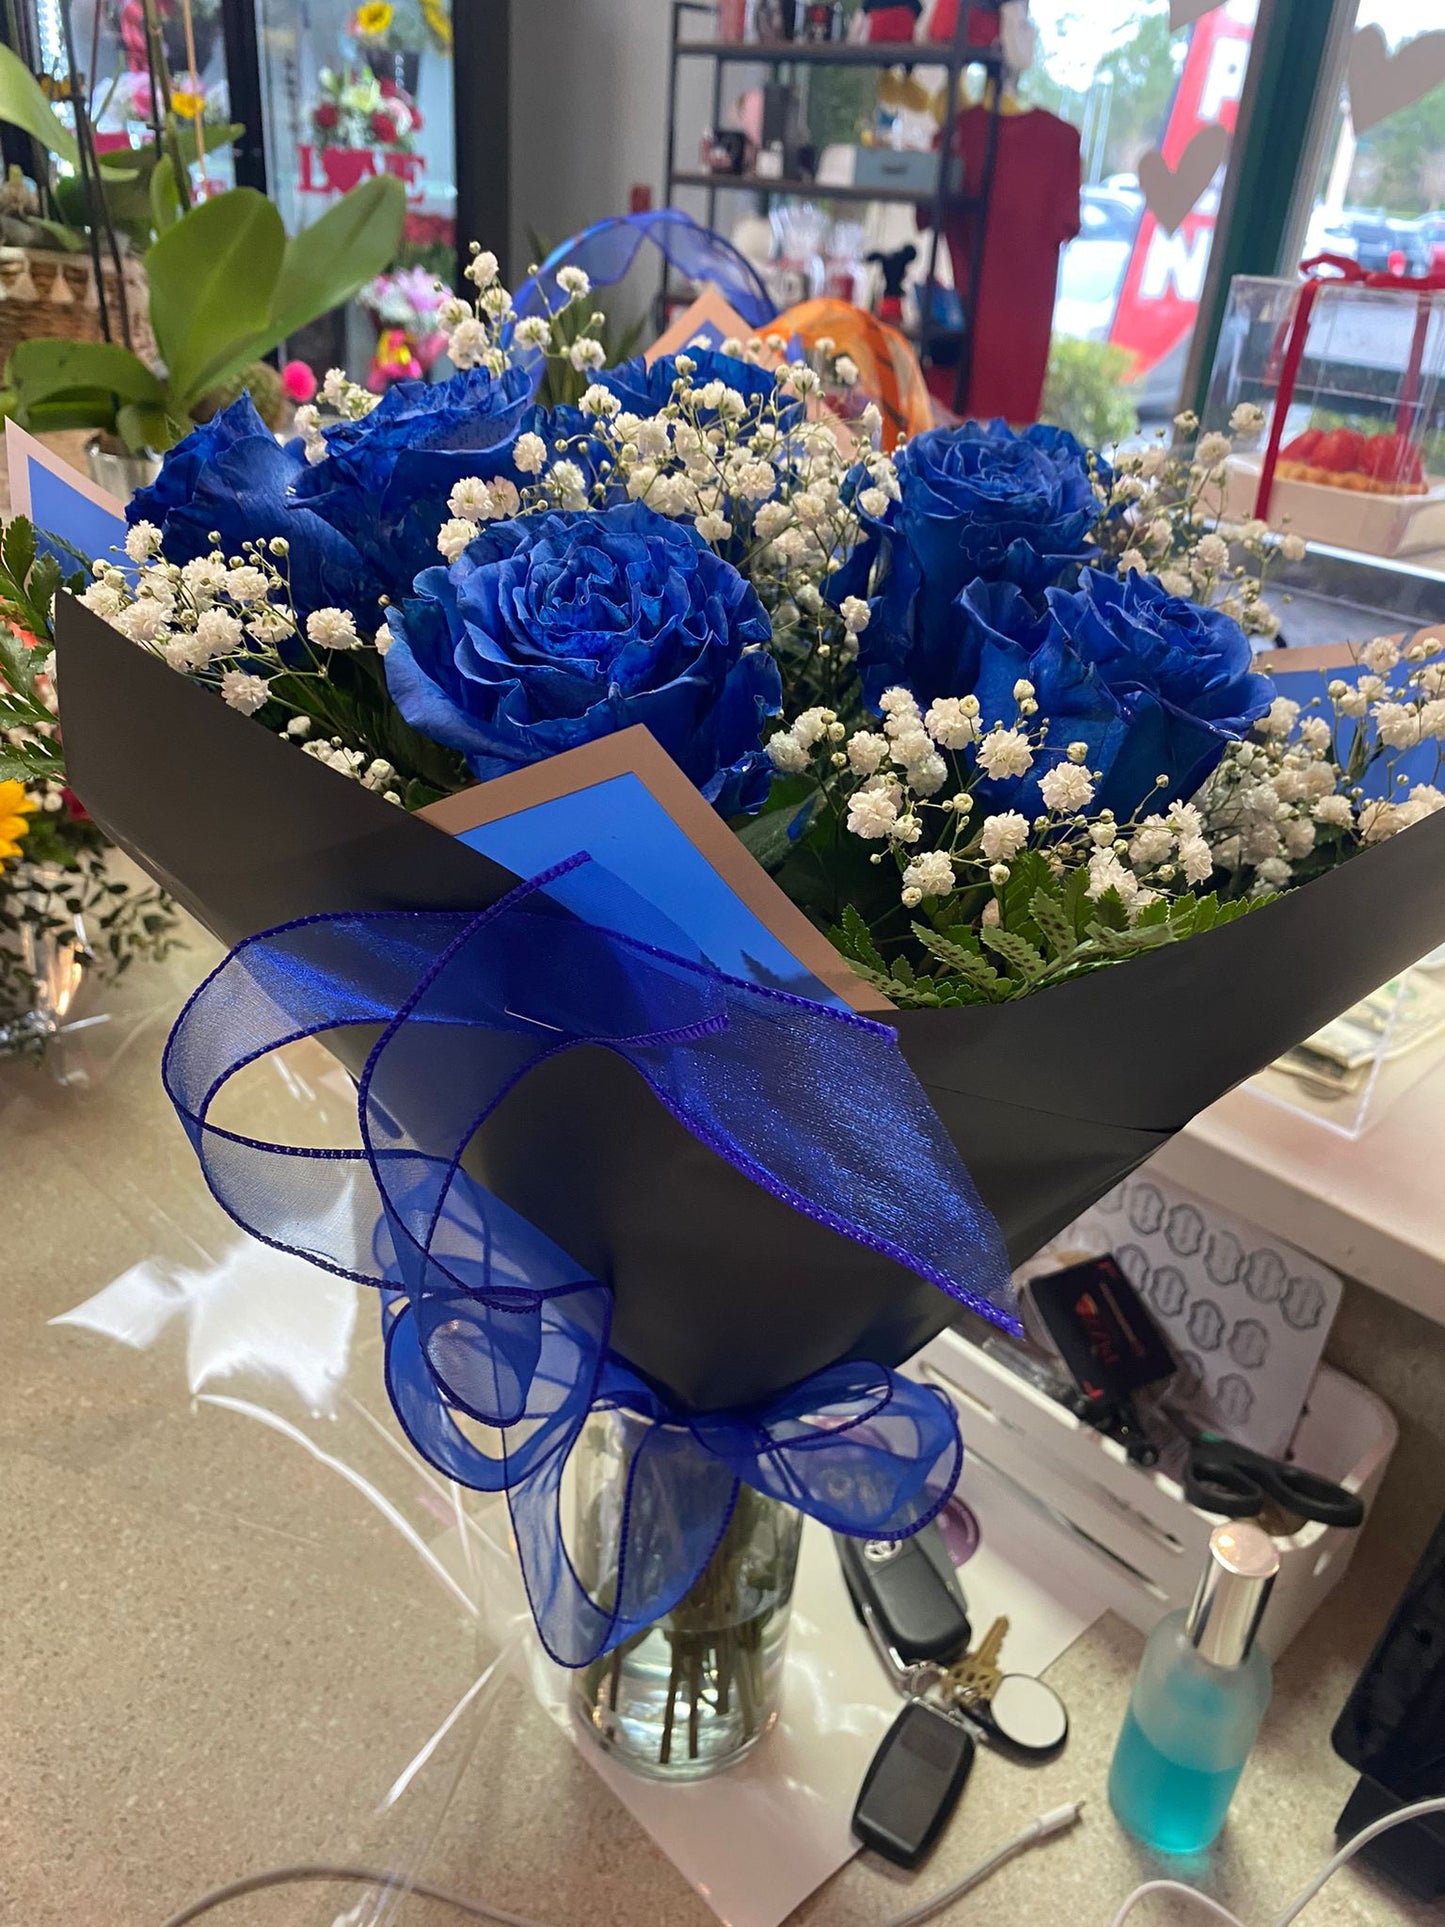 Blue Moon Bouquet - 12 Fresh Blue Roses